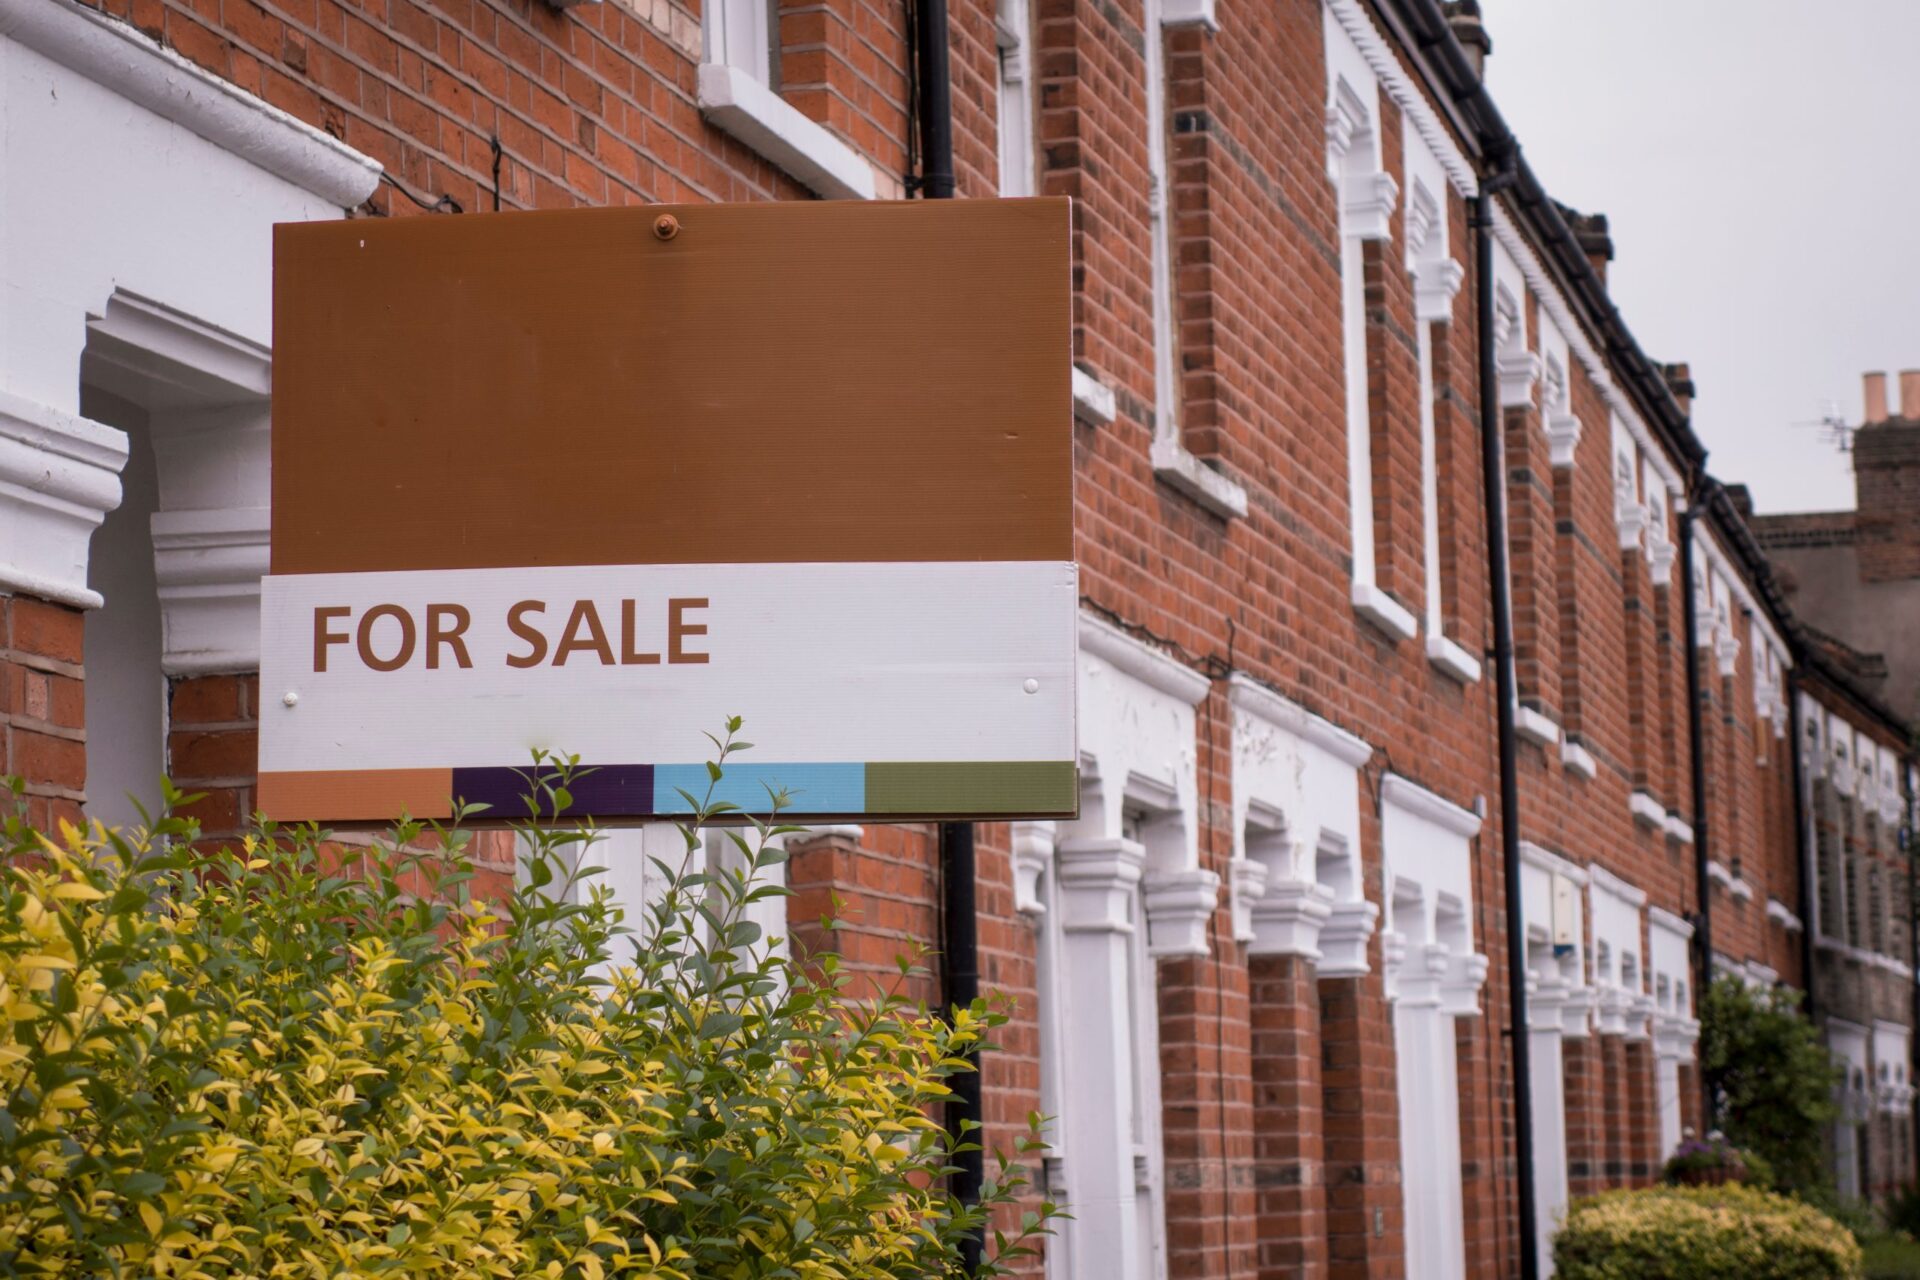 Homebuyer Demand Hits Highest Level Since 2017